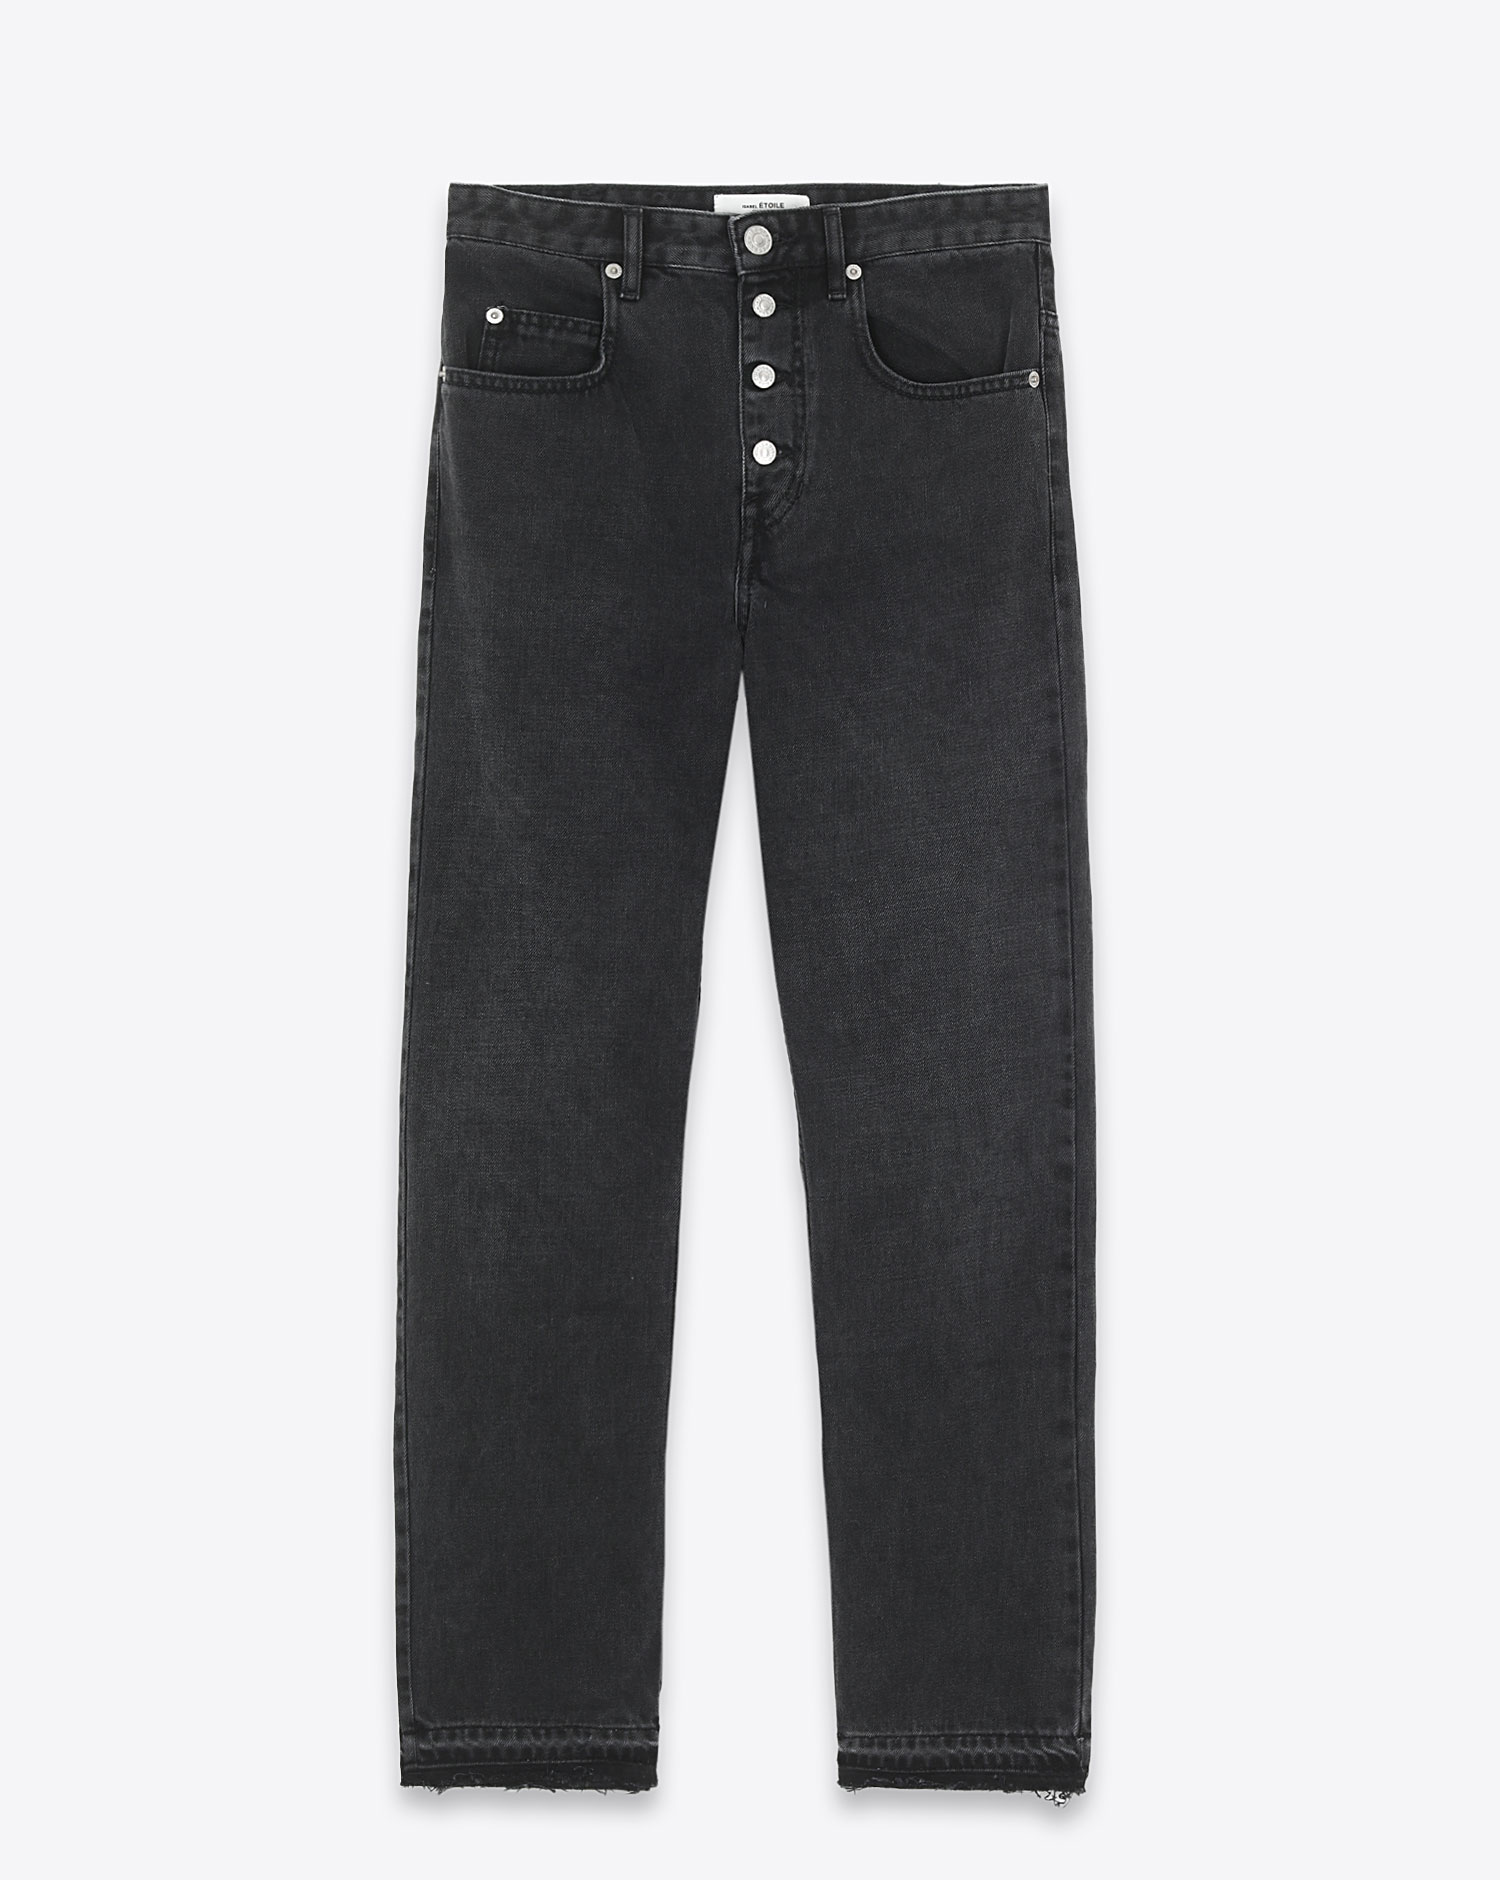 Jeans boutons apparents Belden faded black Isabel Marant Etoile 